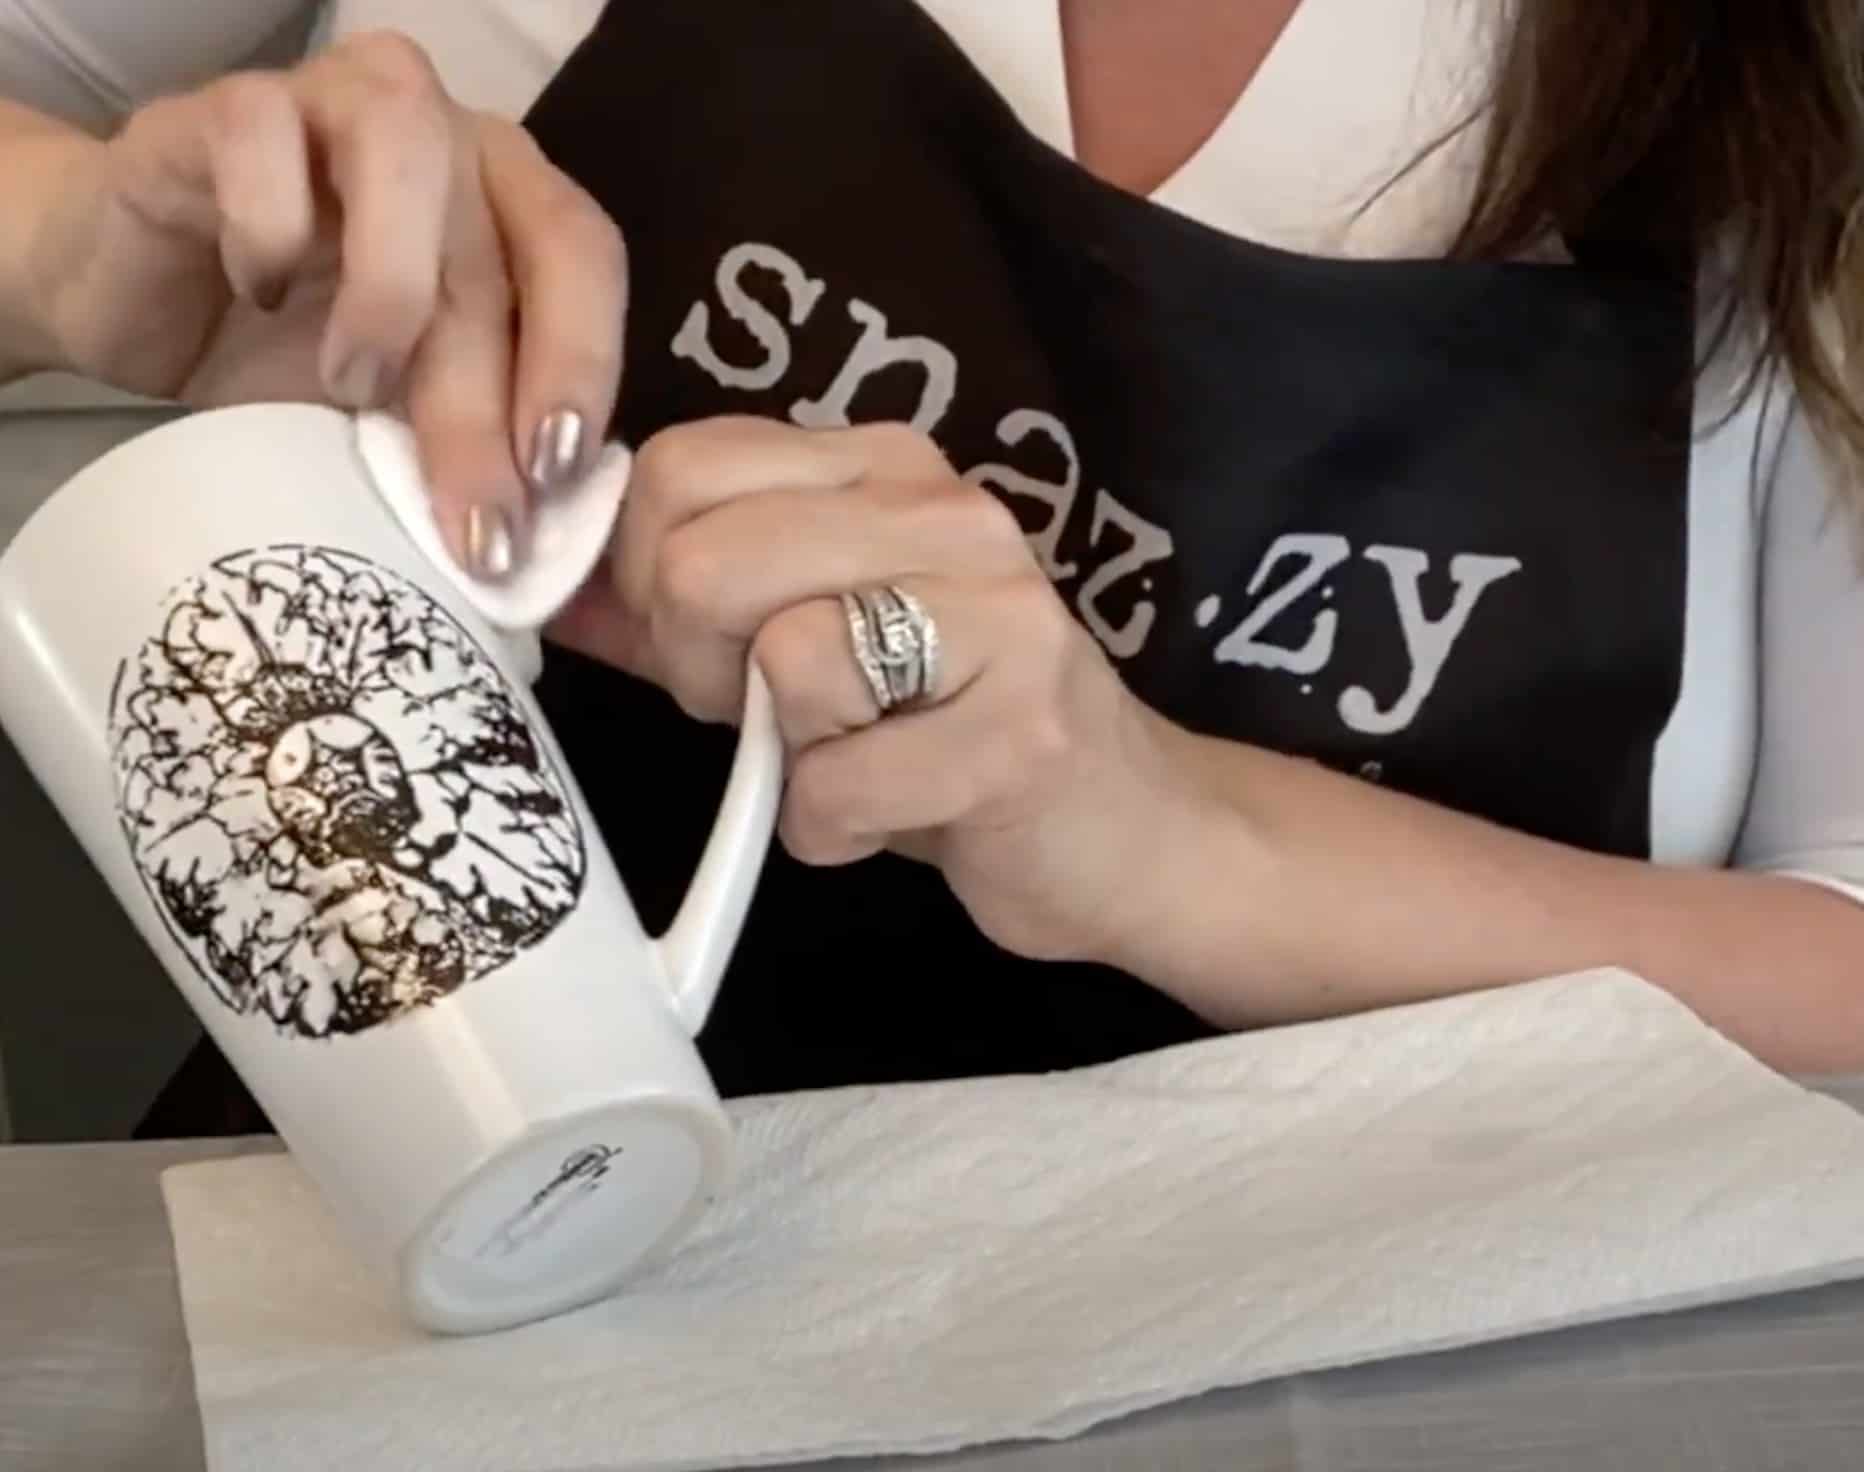 Easy DIY Painted Coffee Mugs (Dishwasher Safe Too!)